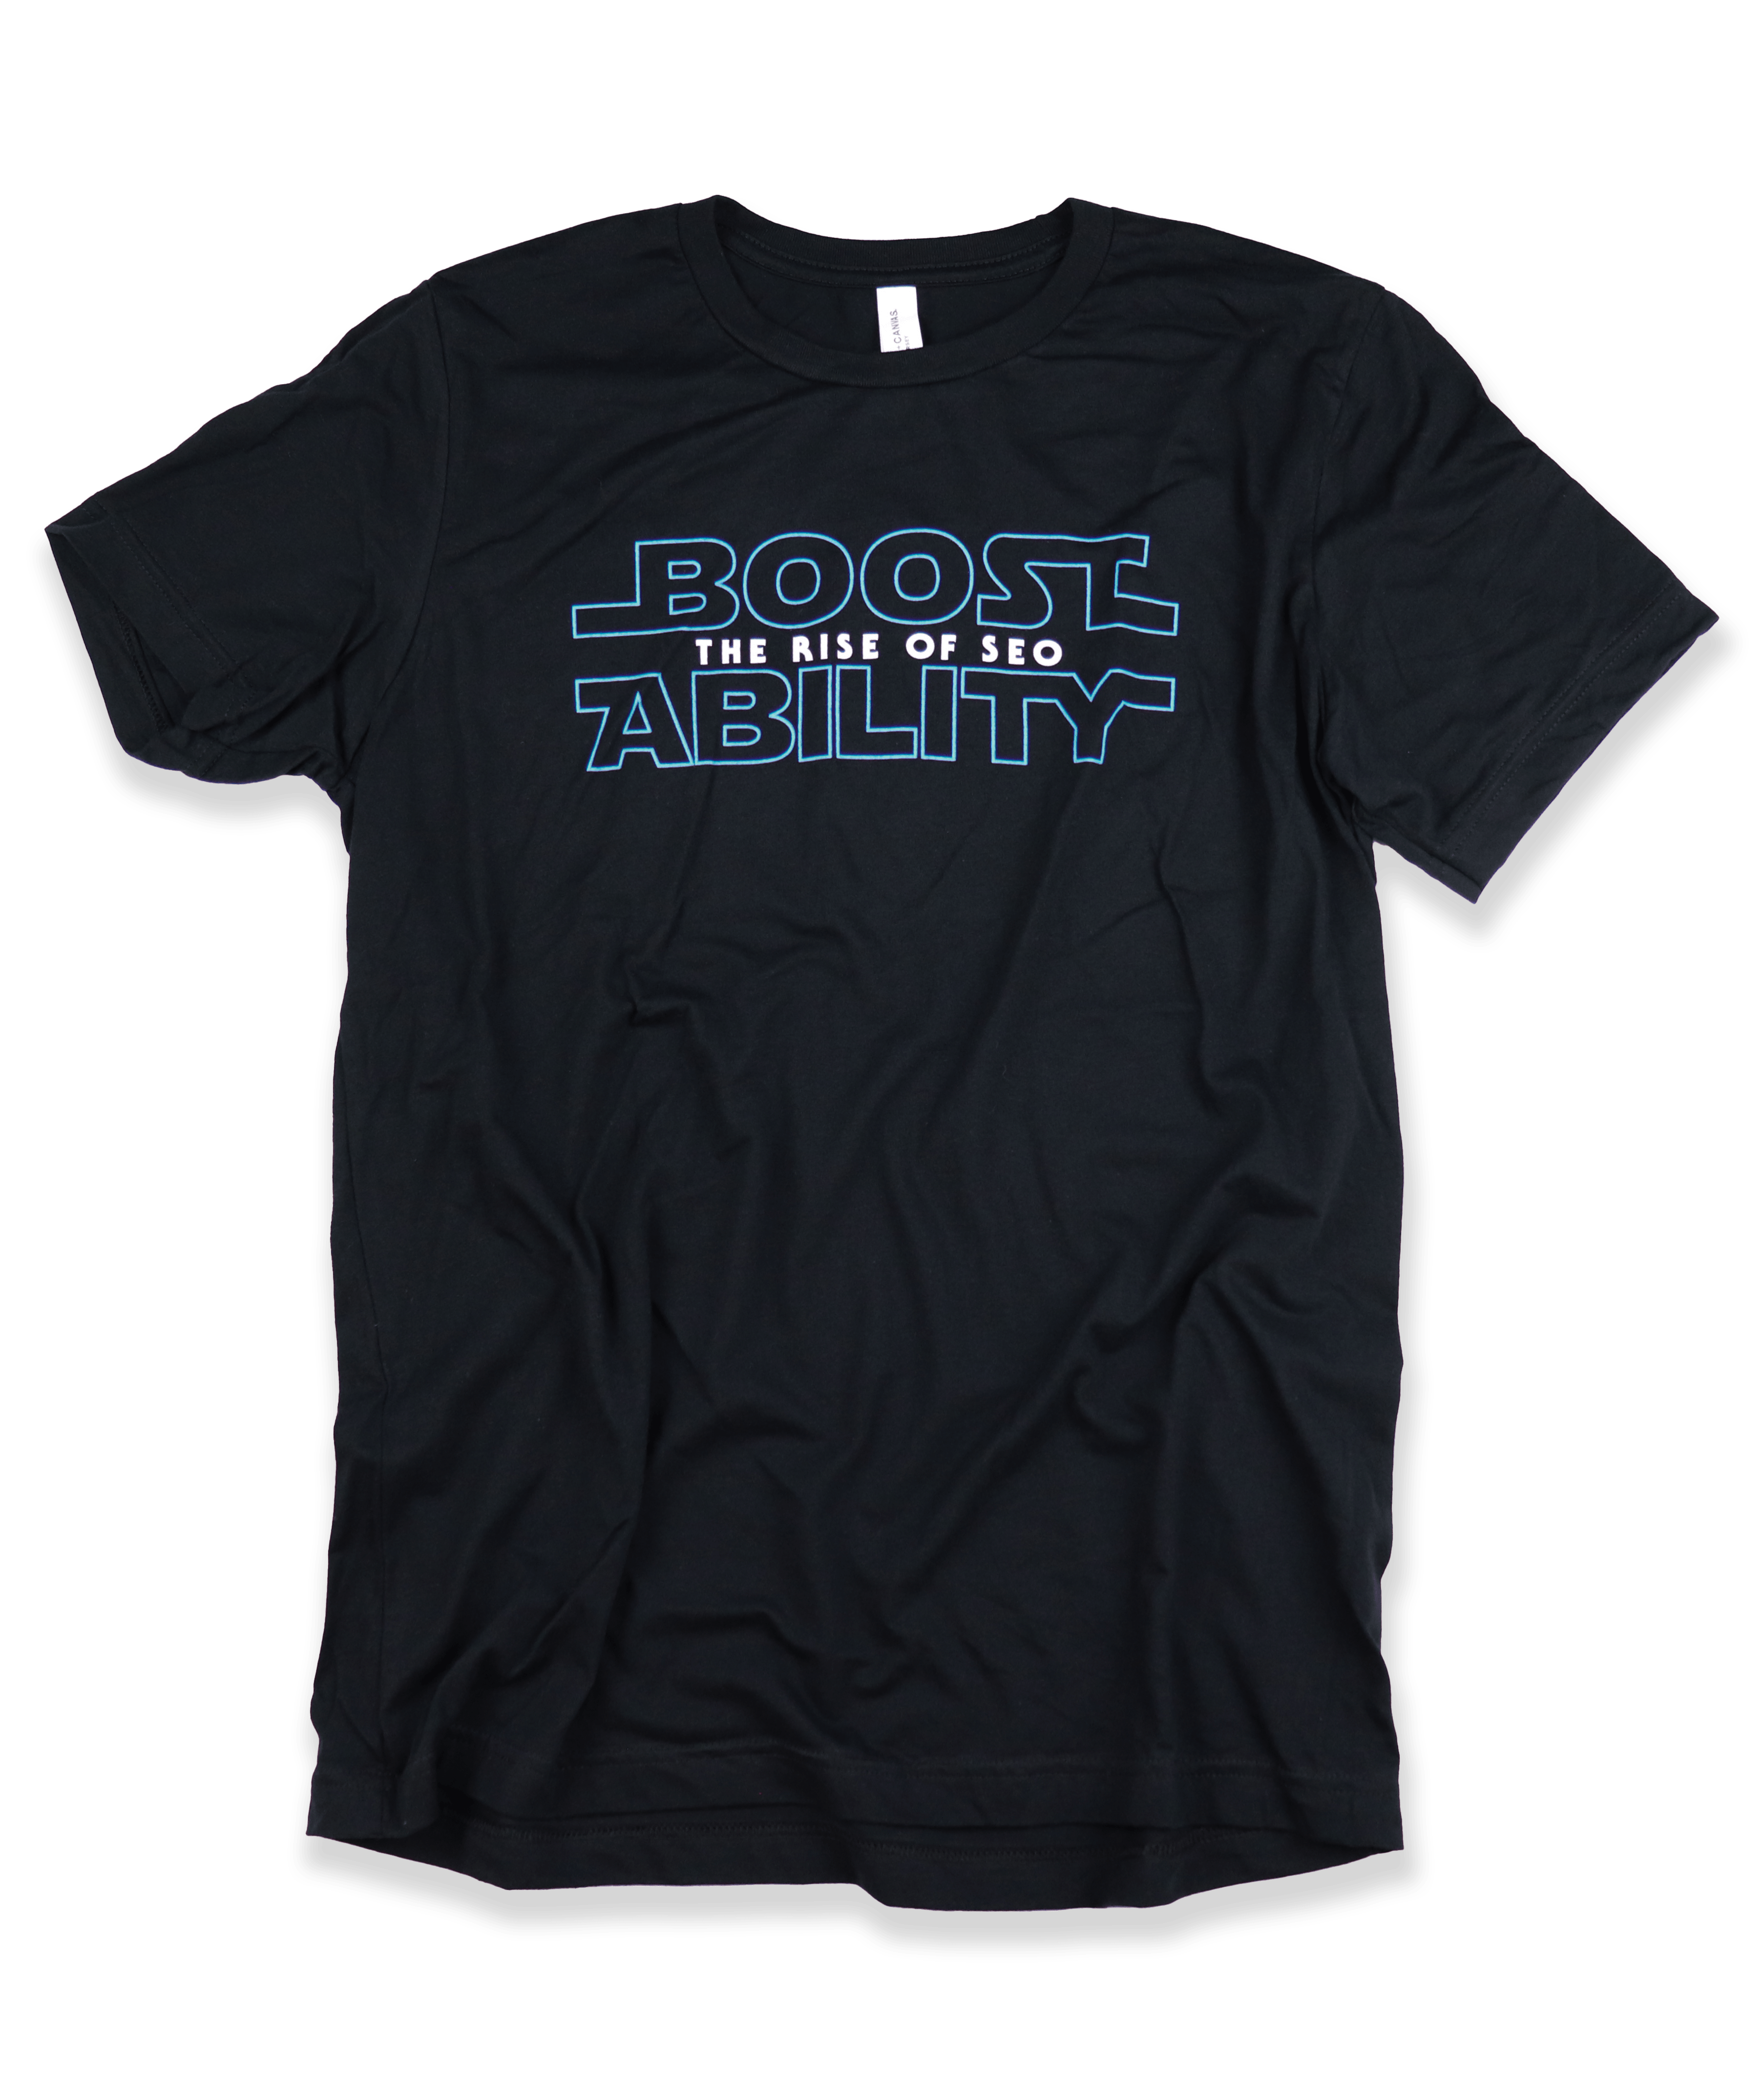 Boostability Rise of SEO t-shirt